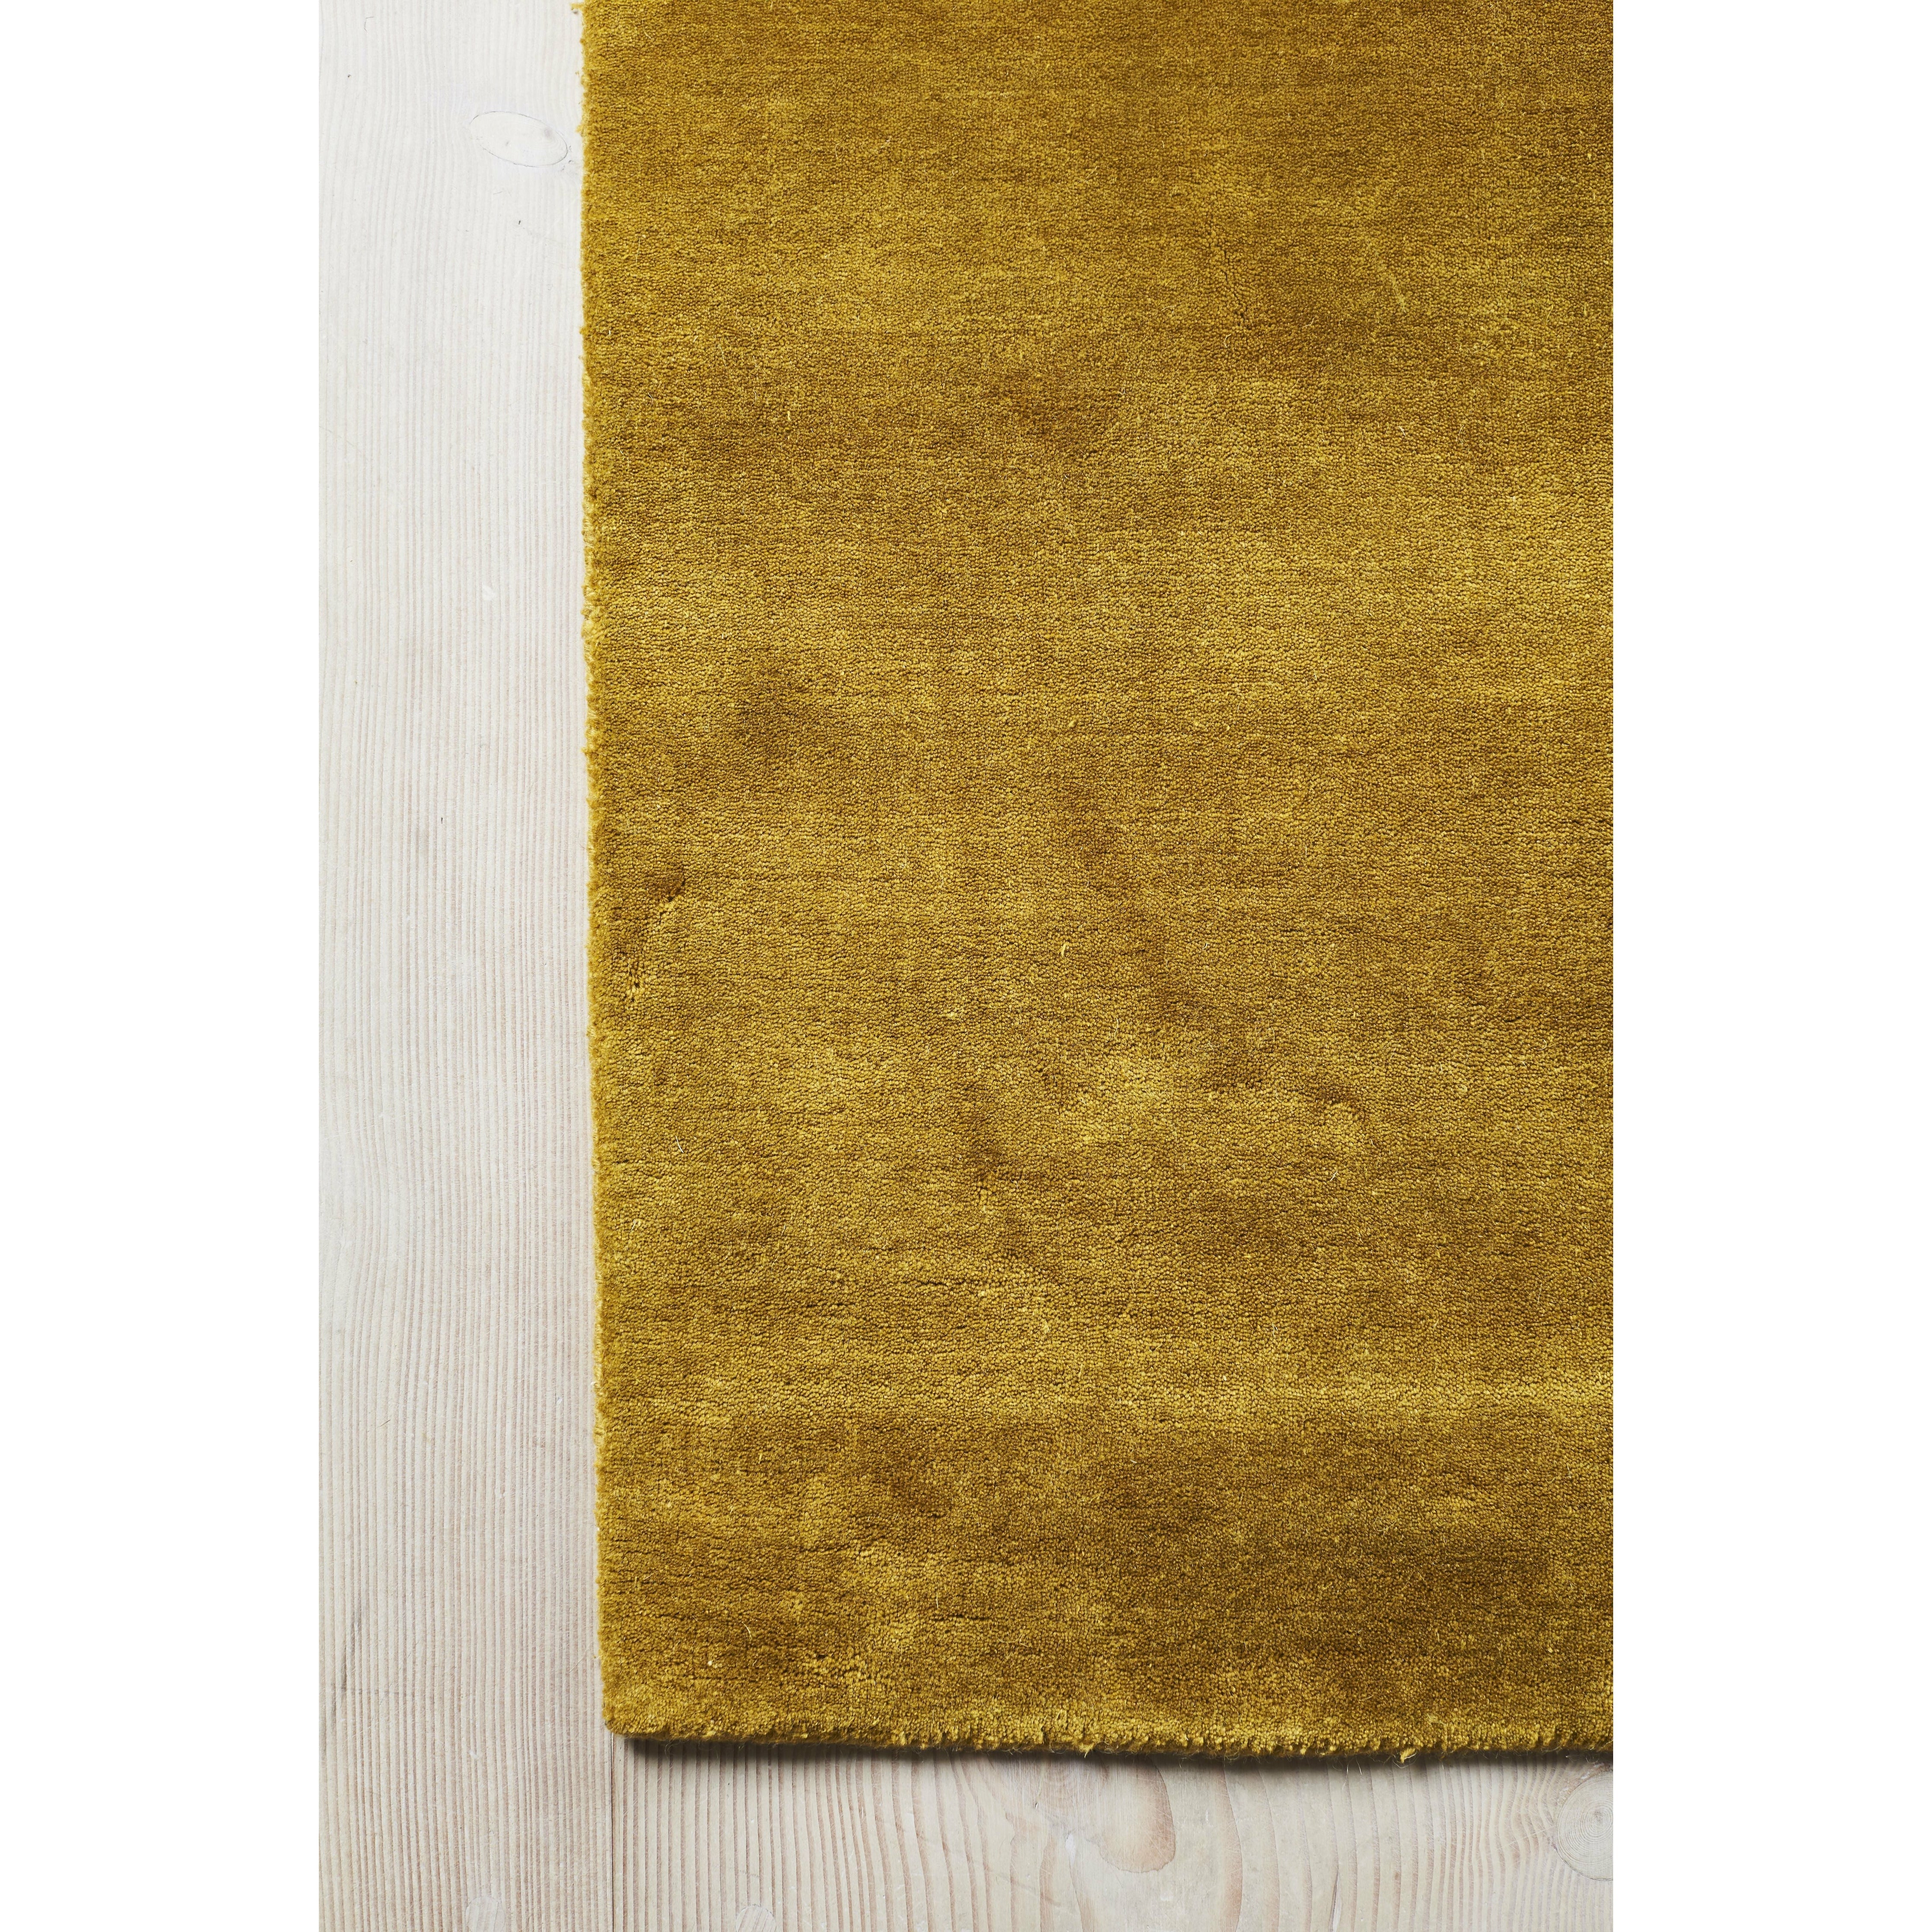 Massimo Earth Bamboo Dywan Chiński żółty, 170x240 cm